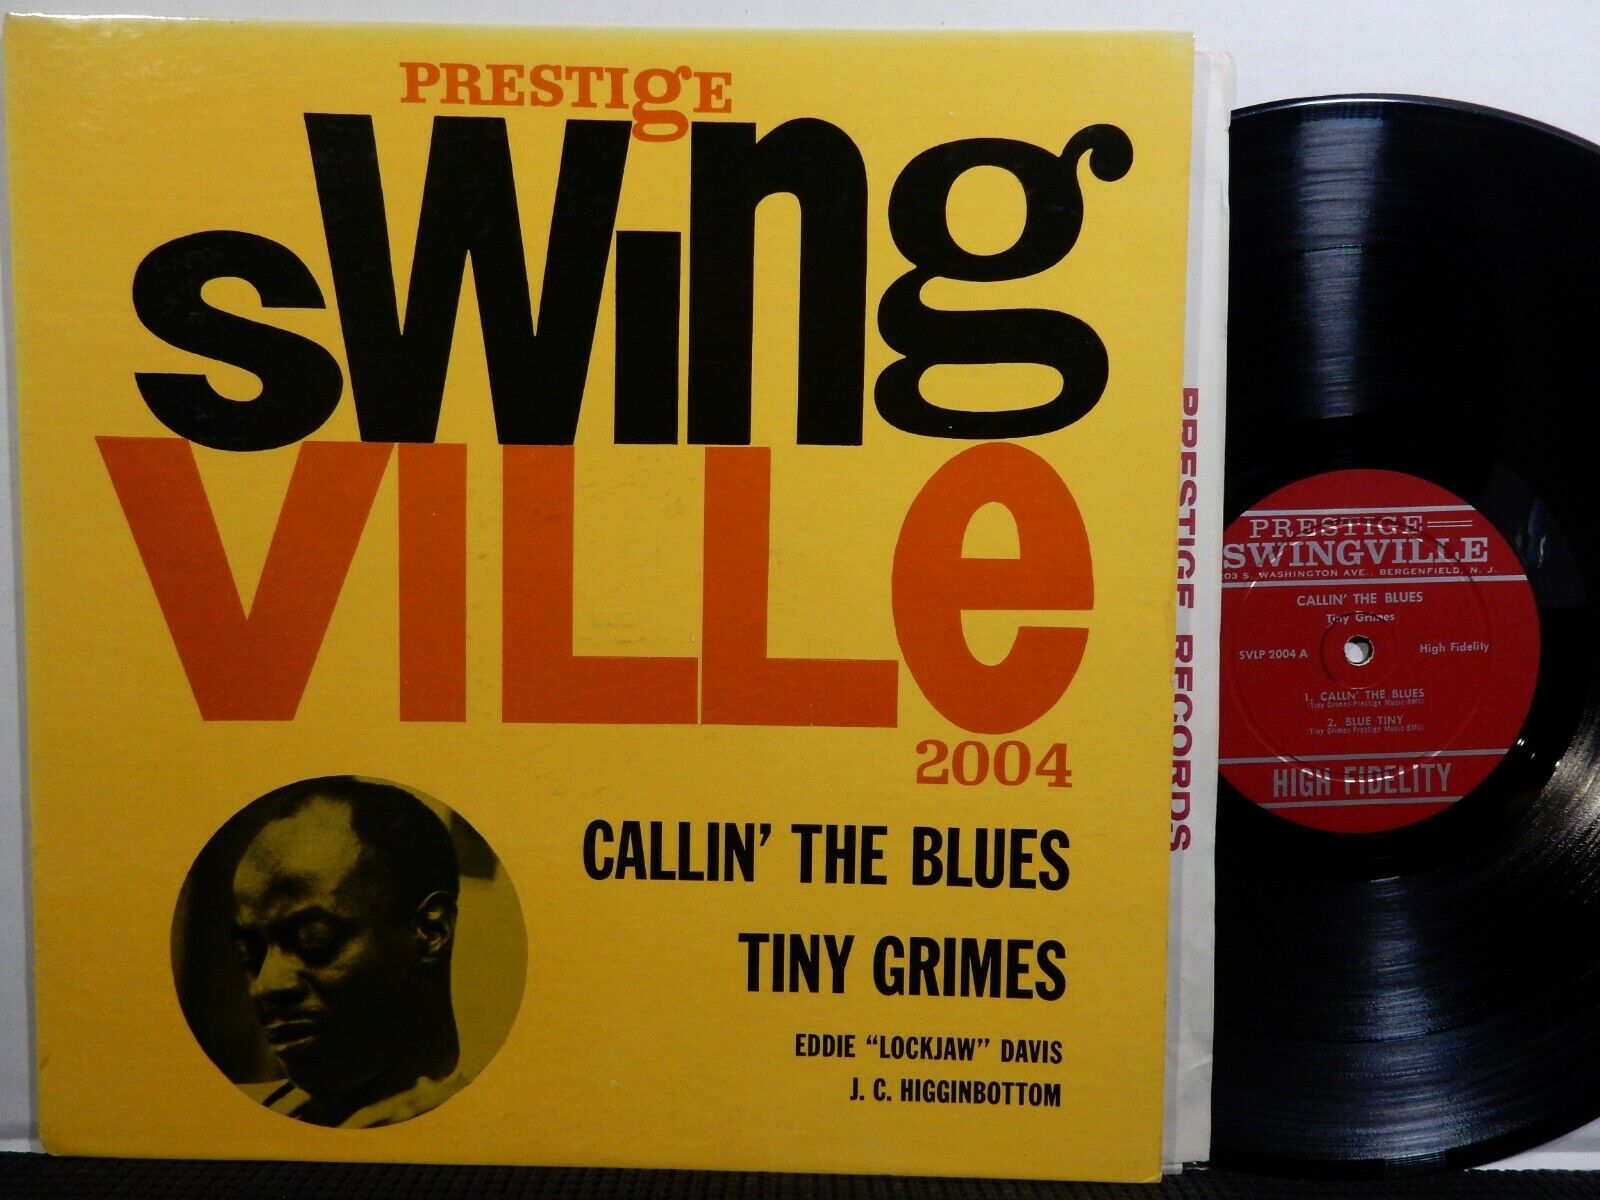 TINY GRIMES Callin’ The Blues LP PRESTIGE SWINGVILLE 2004 MONO DG RVG 1960 Jazz